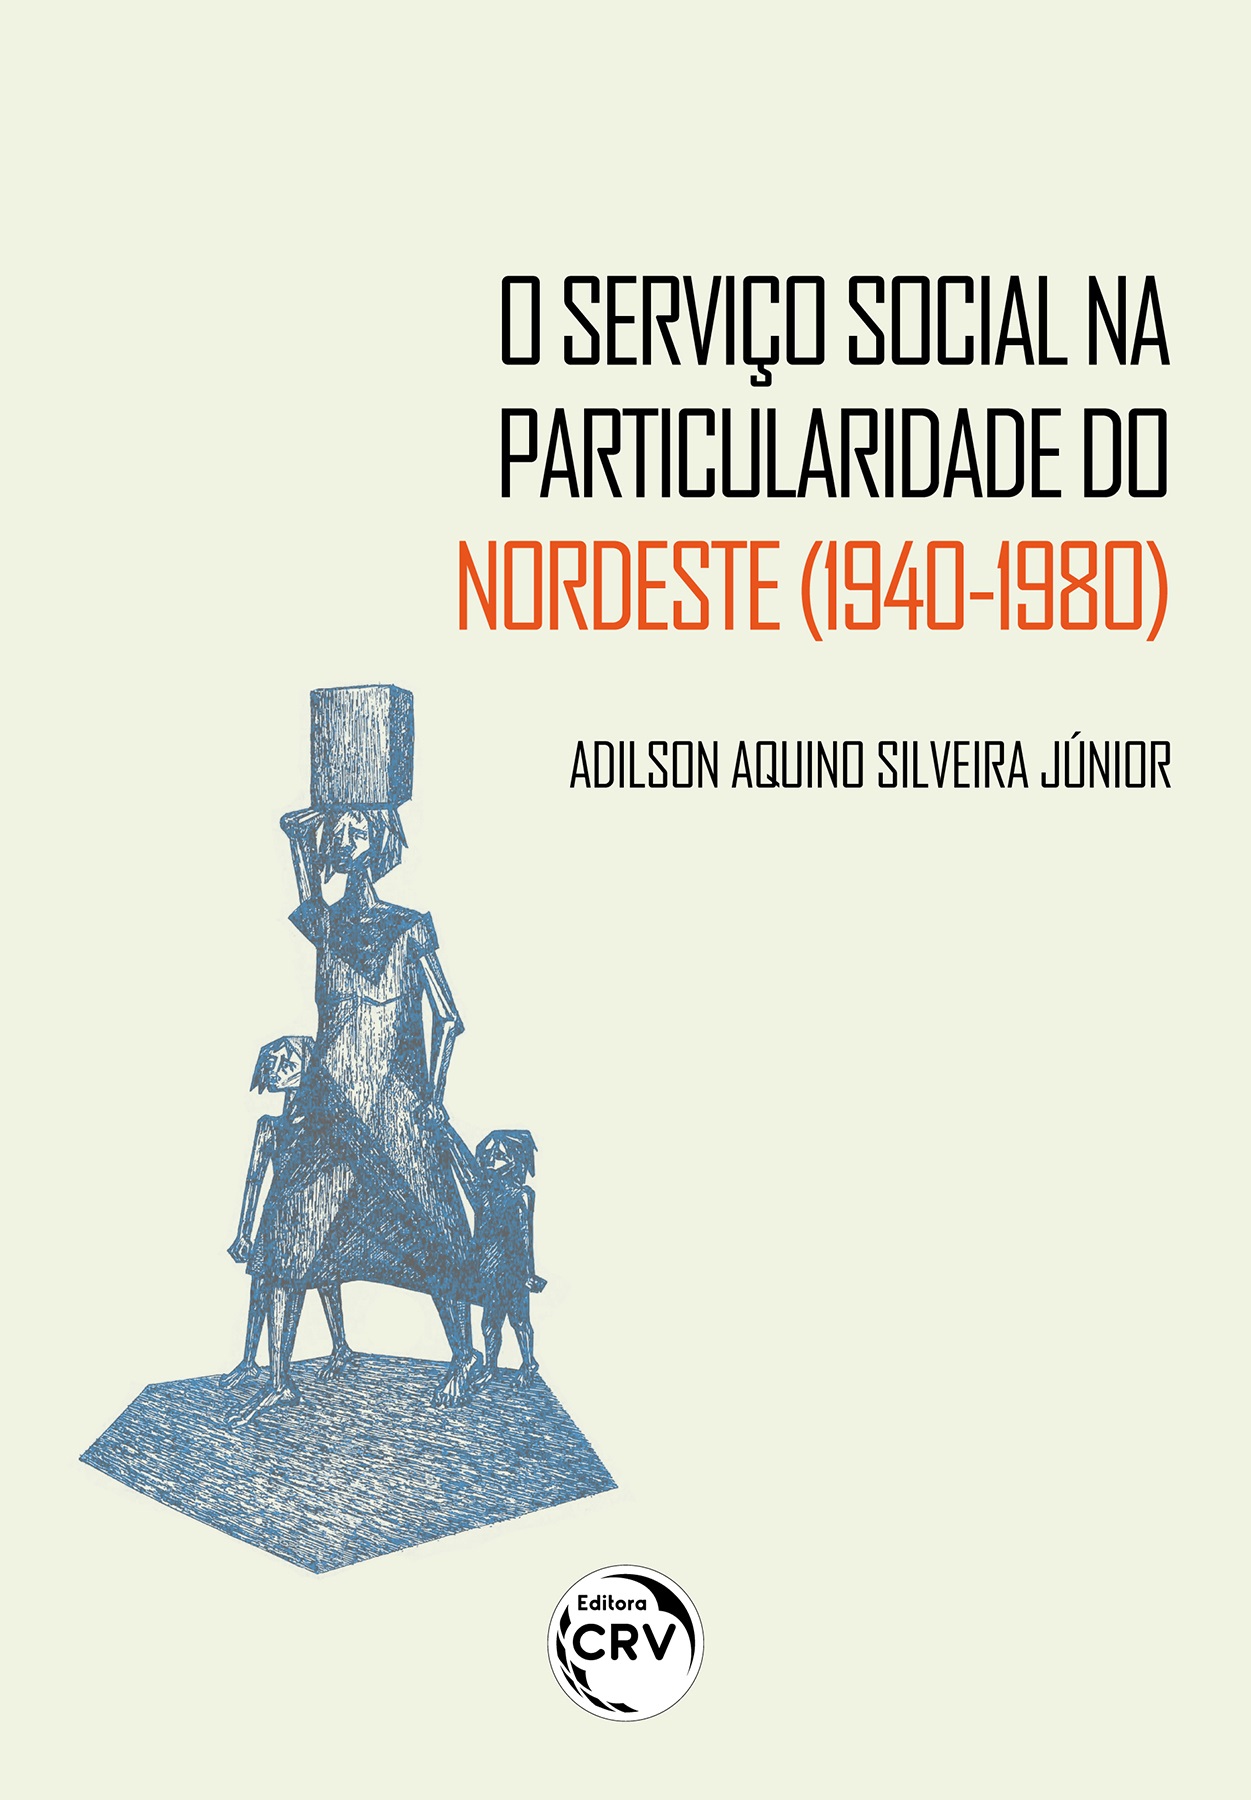 Capa do livro: O SERVIÇO SOCIAL NA PARTICULARIDADE DO NORDESTE (1940-1980)